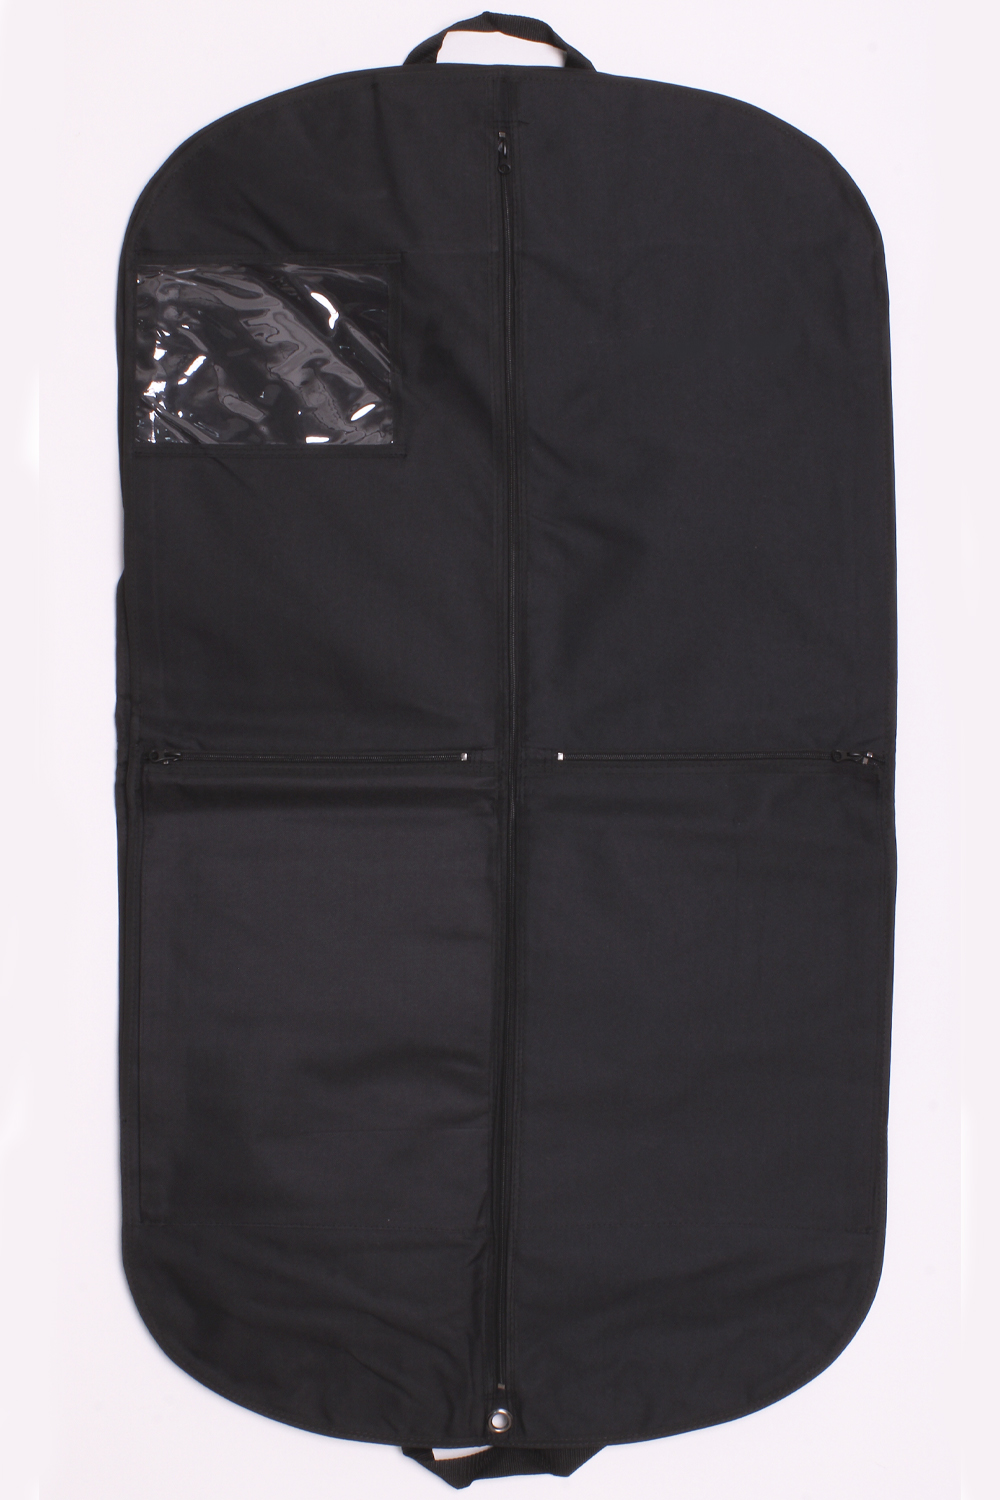 Kilt Outfit Carrier Bag  - Inside View, Unfolded